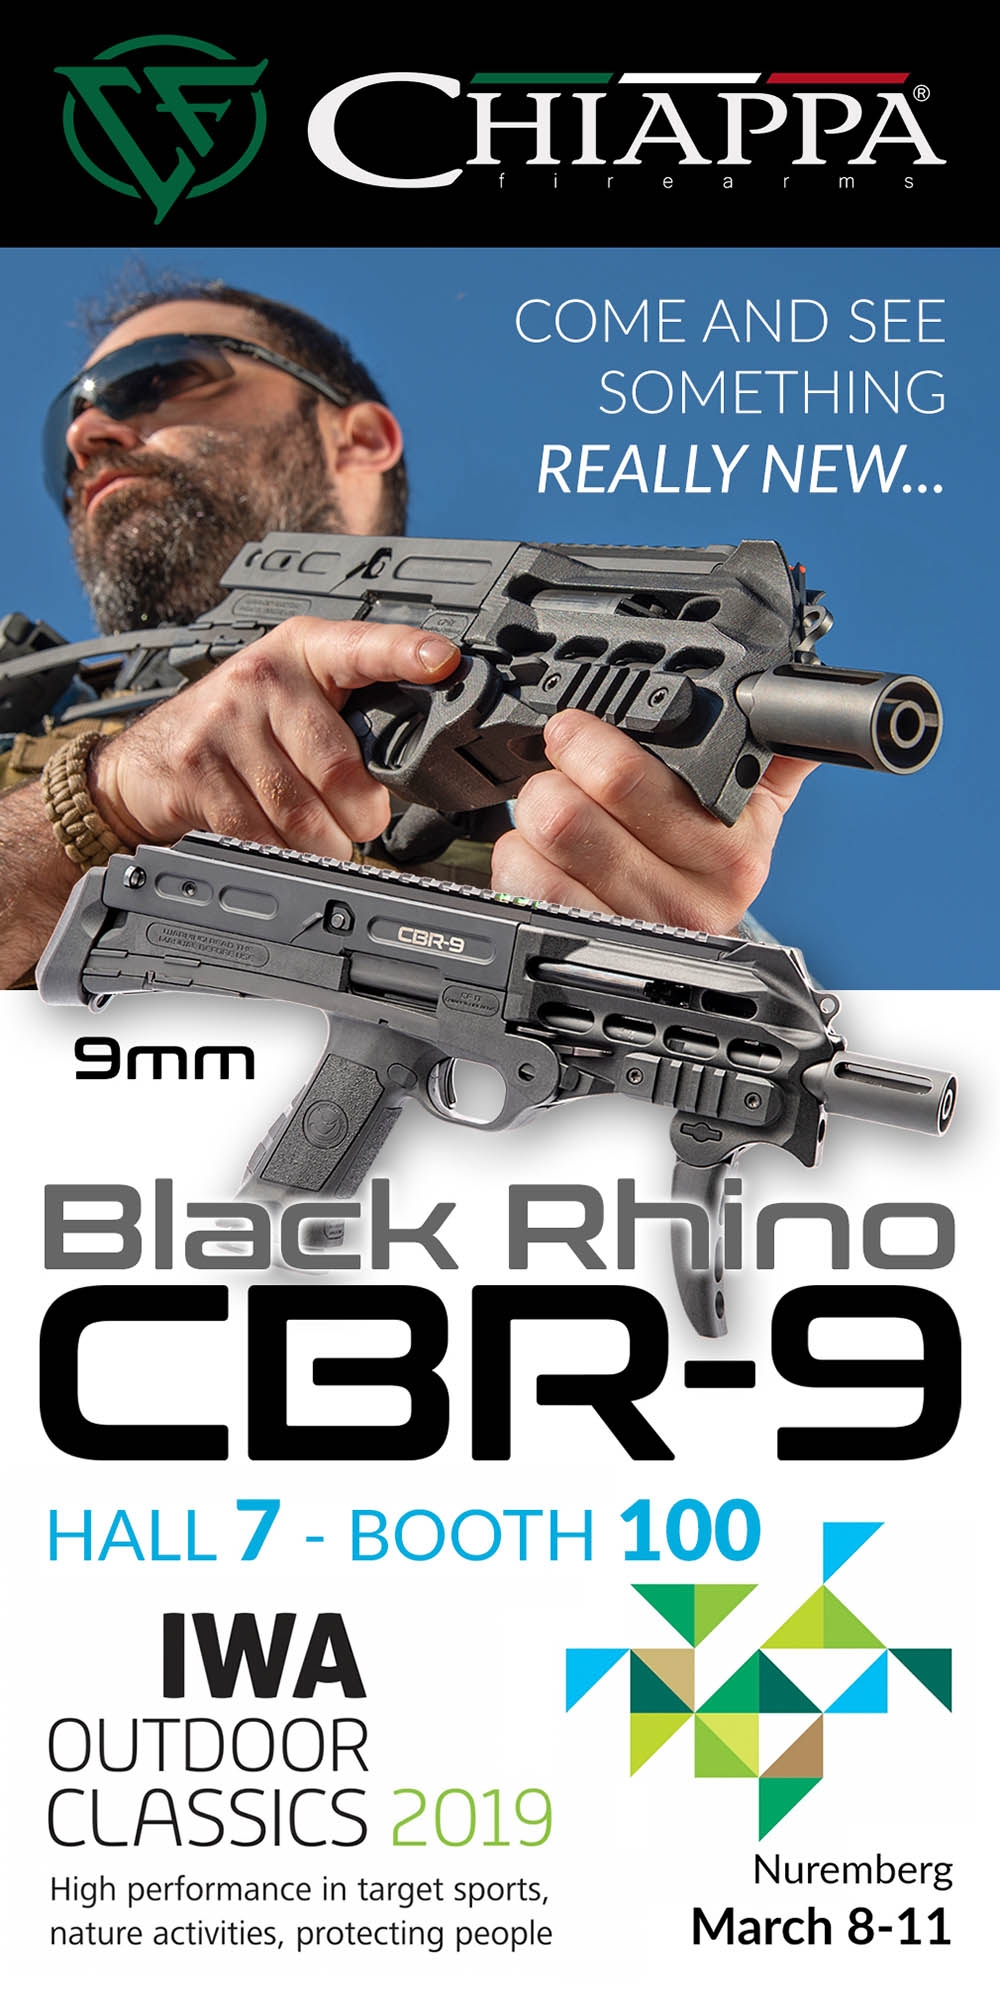 New Chiappa Firearms CBR-9 Black Rhino, will be introduced at IWA 2019